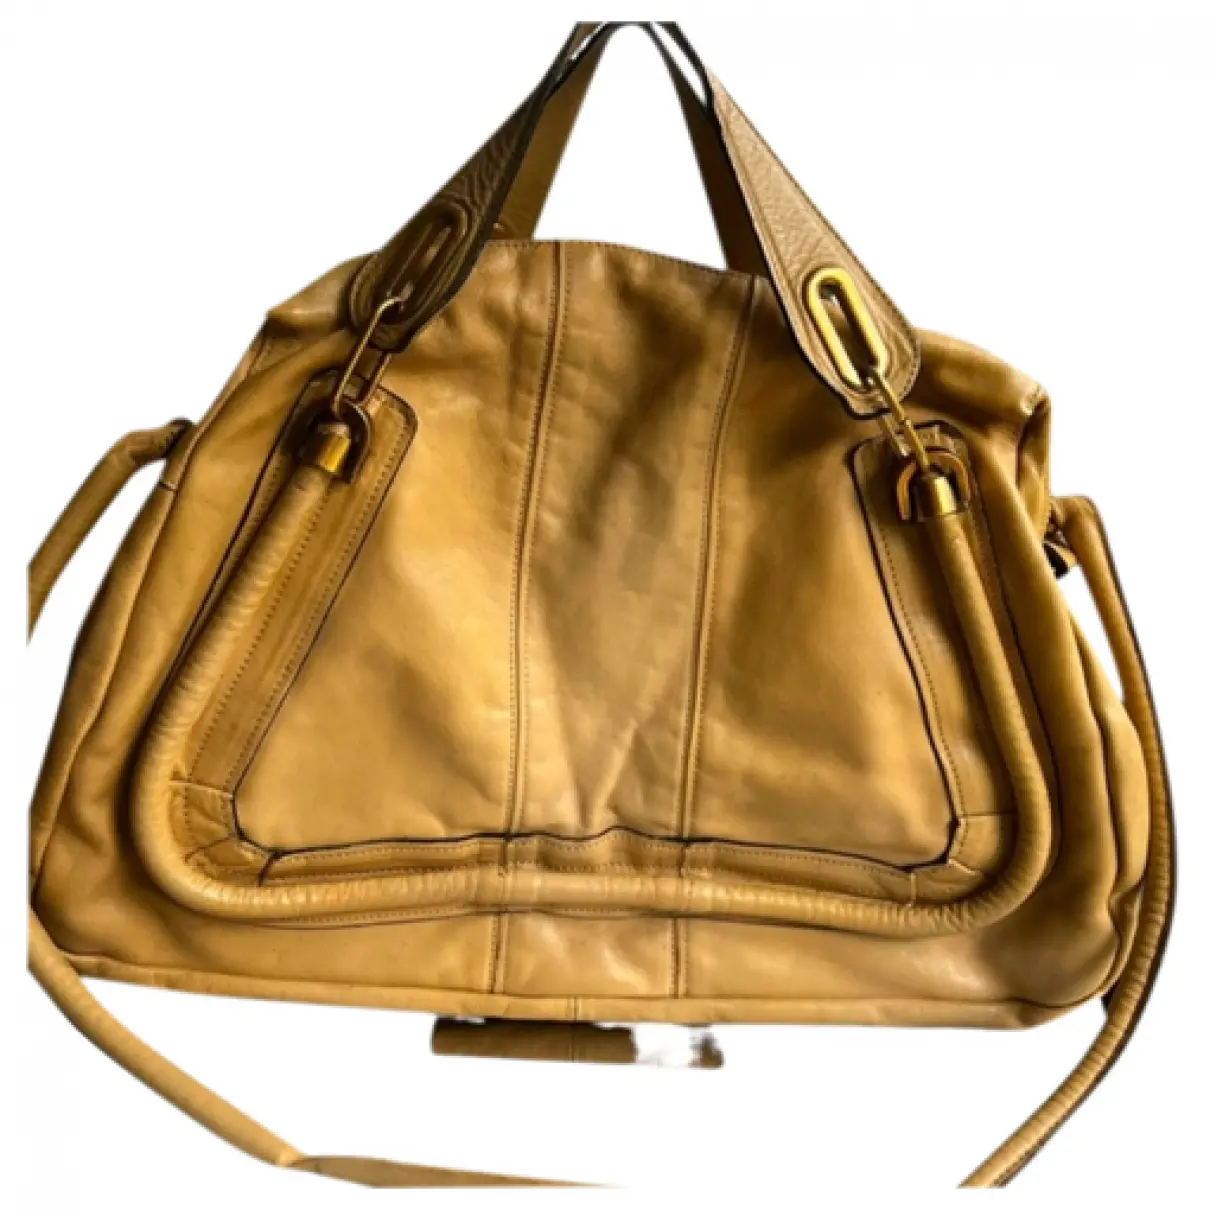 Paraty leather handbag